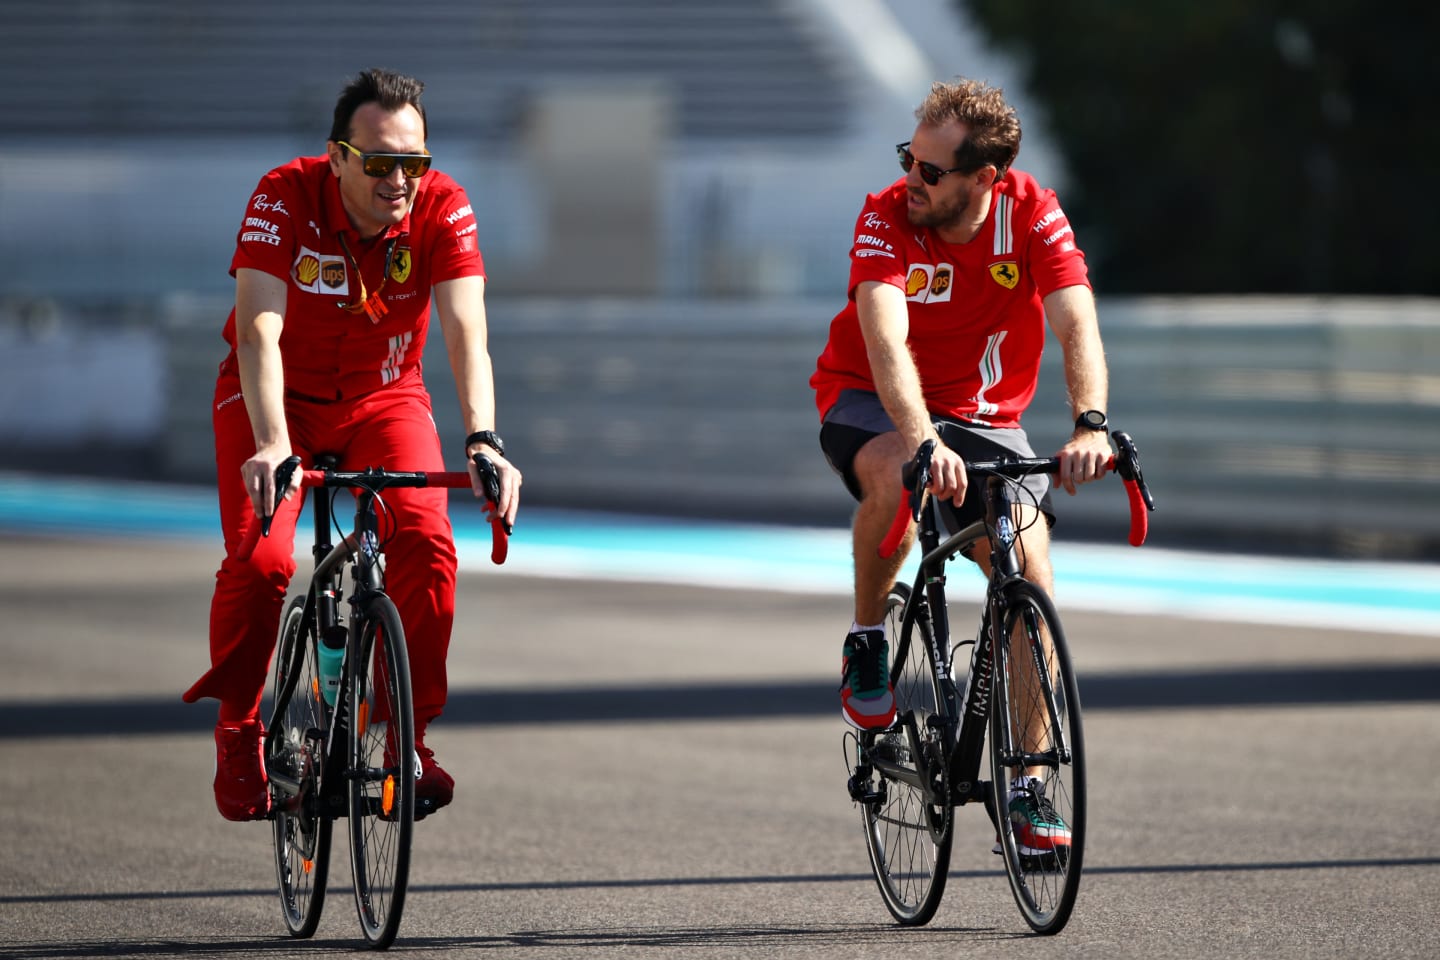 ABU DHABI, UNITED ARAB EMIRATES - DECEMBER 10: Sebastian Vettel of Germany and Ferrari cycles the